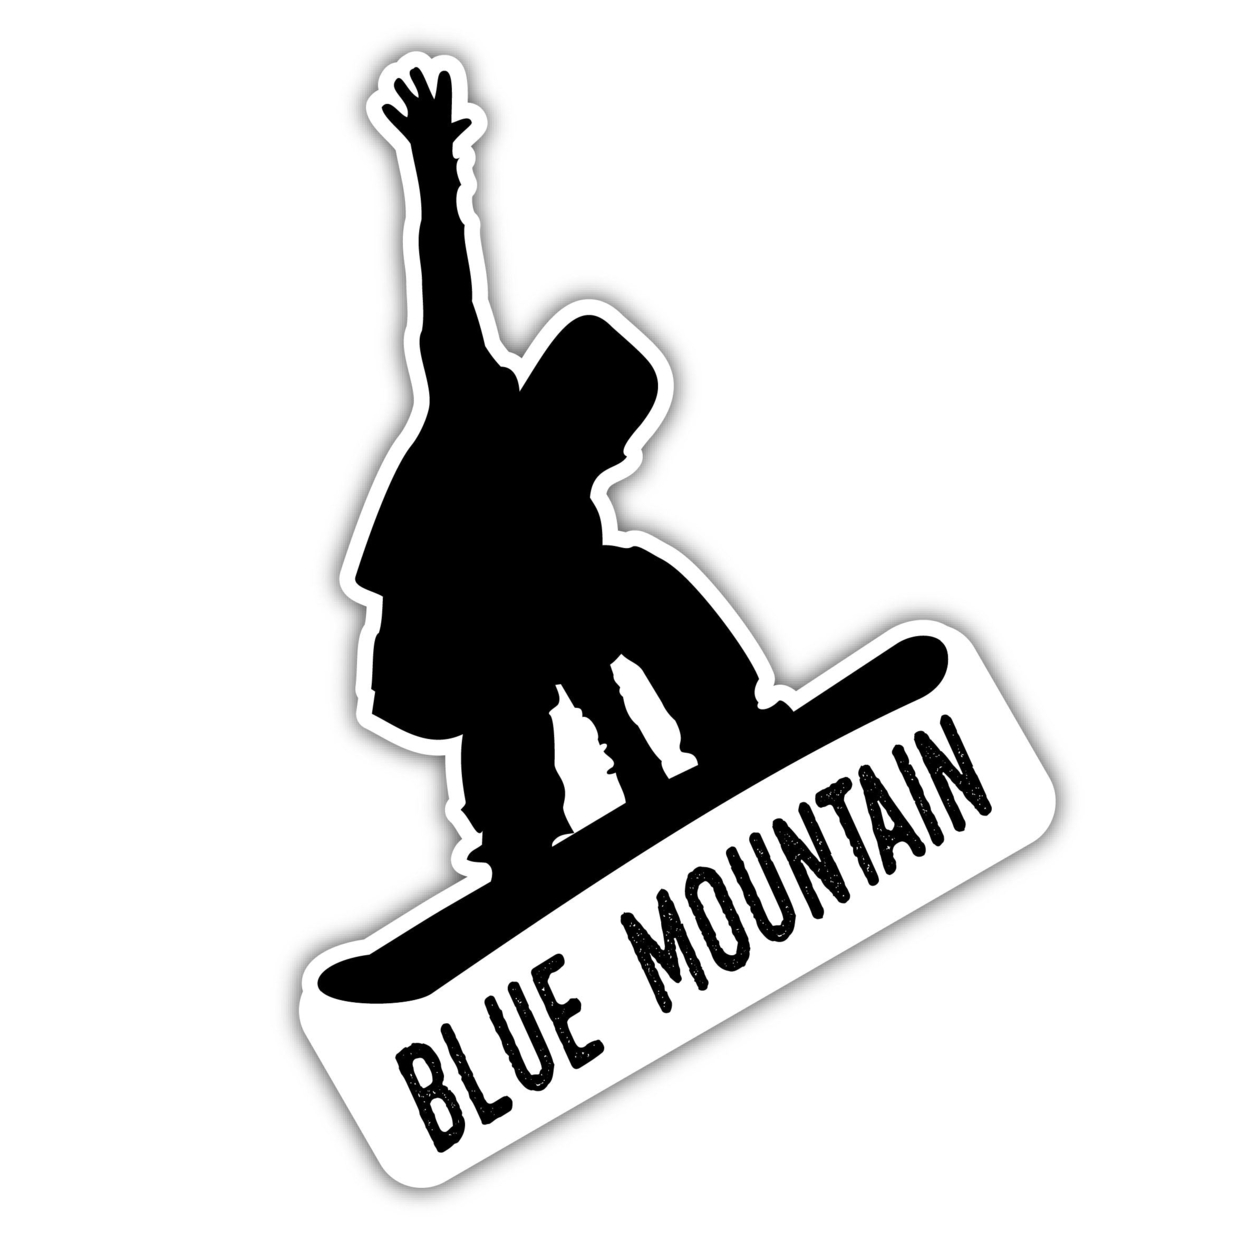 Blue Mountain Ontario Ski Adventures Souvenir Approximately 5 X 2.5-Inch Vinyl Decal Sticker Goggle Design